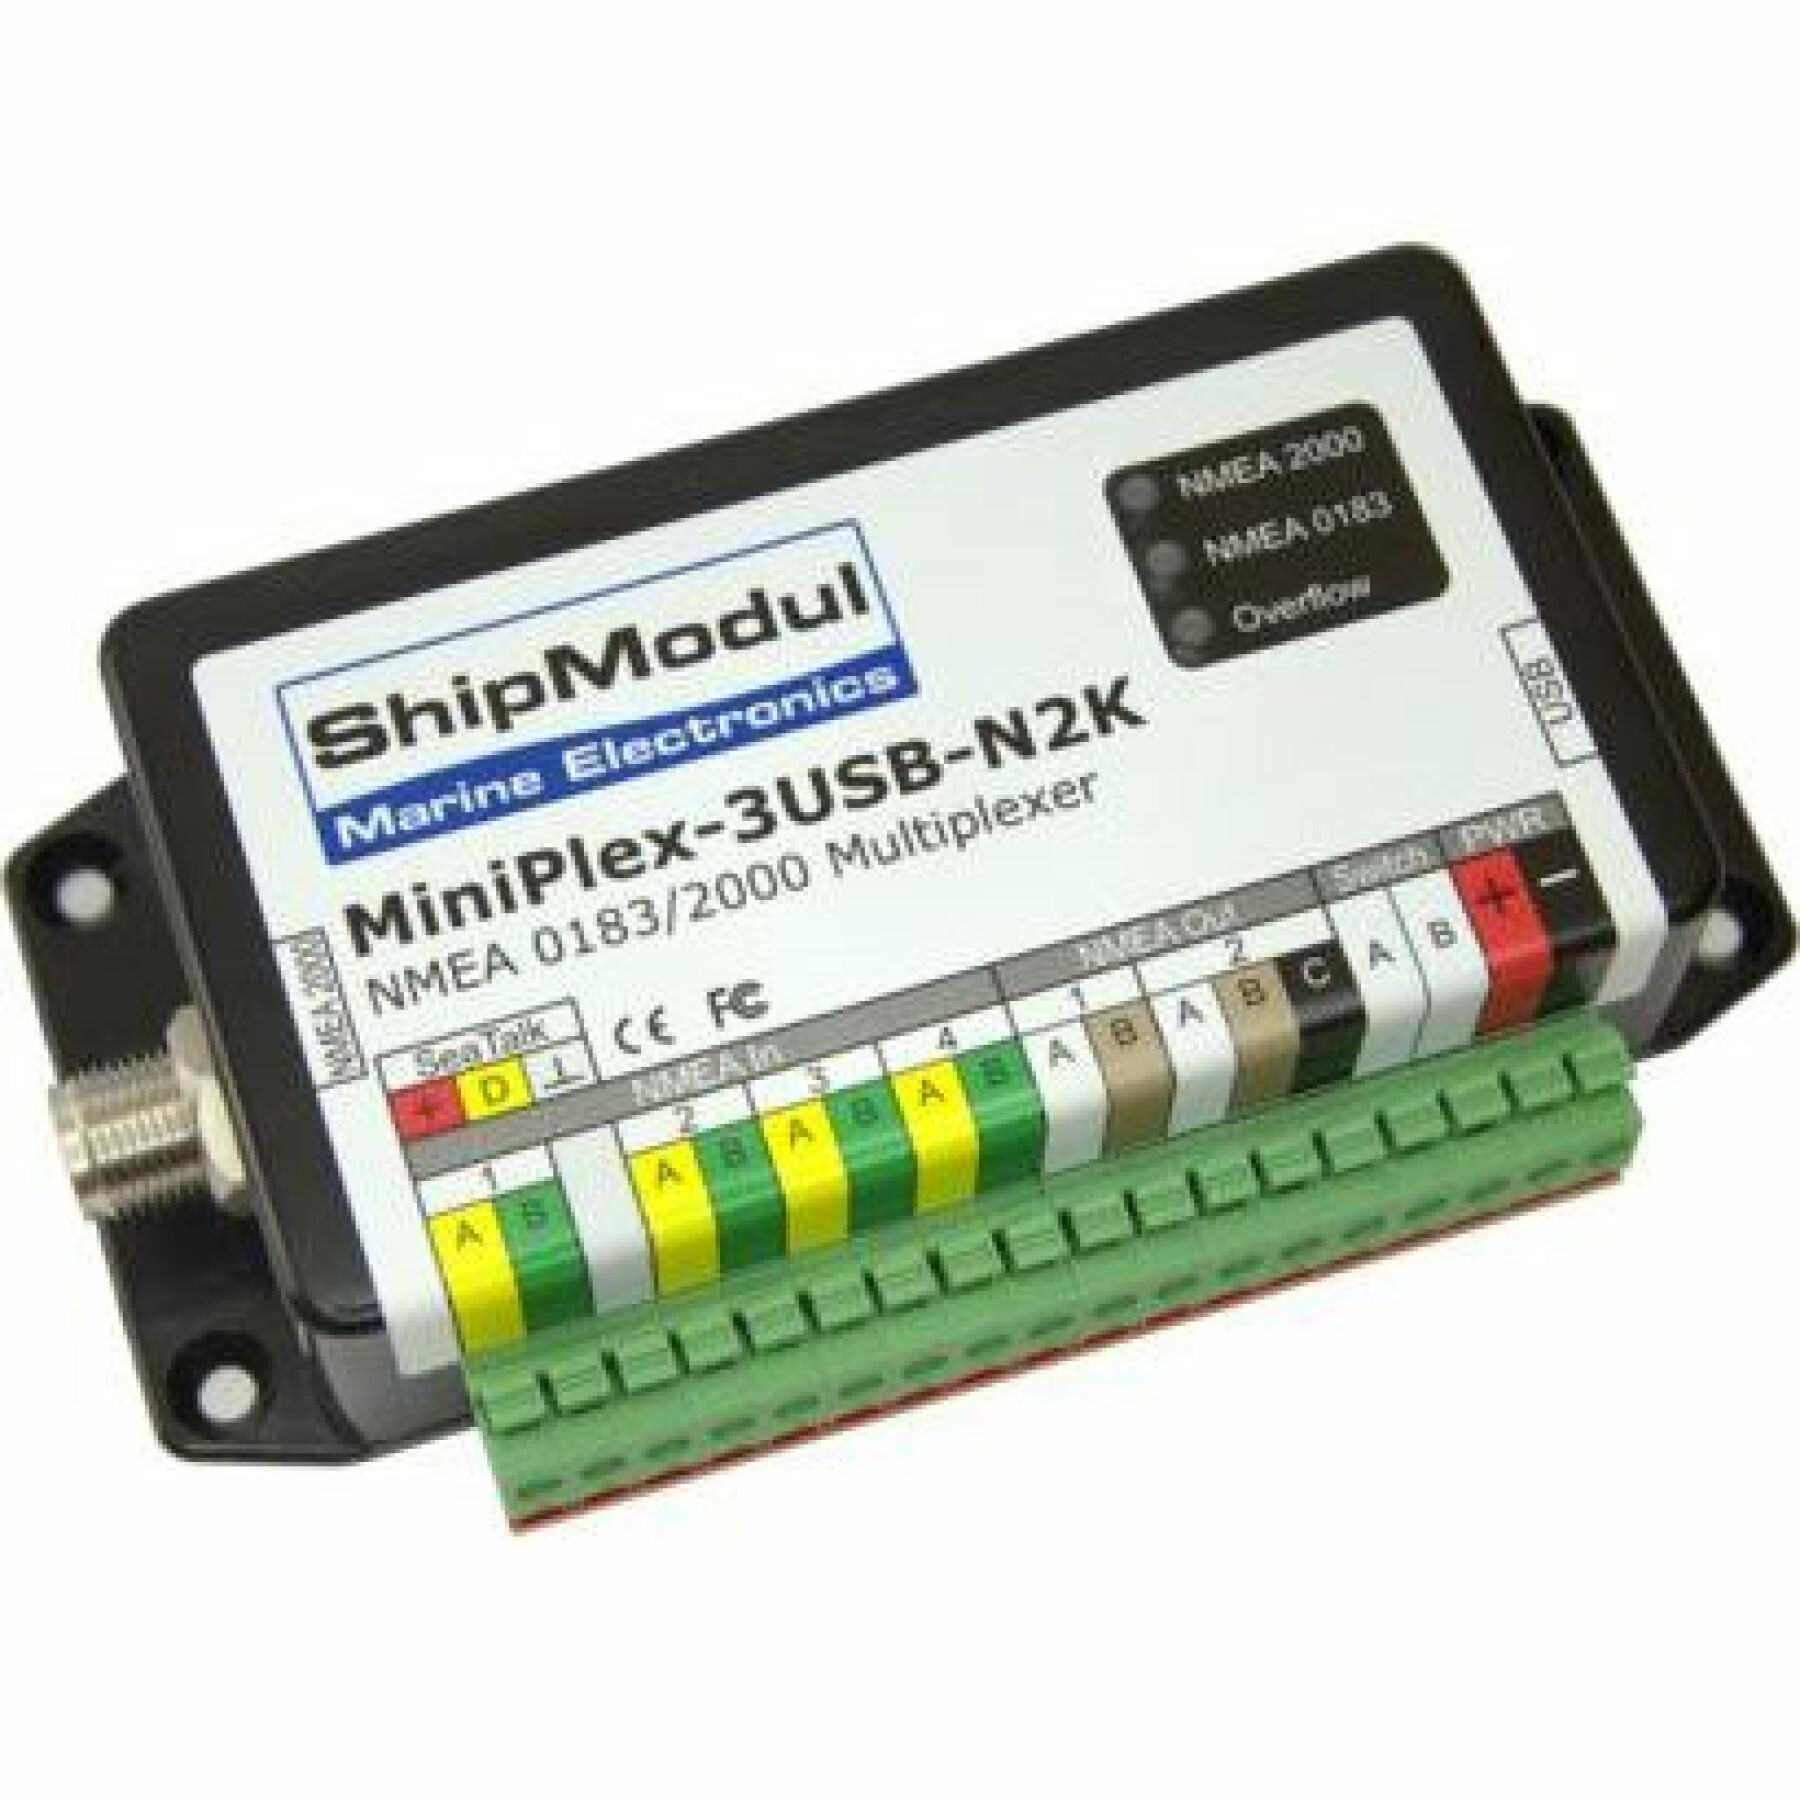 Multiplexer usb versie ShipModul Miniplex-3USB-N2K